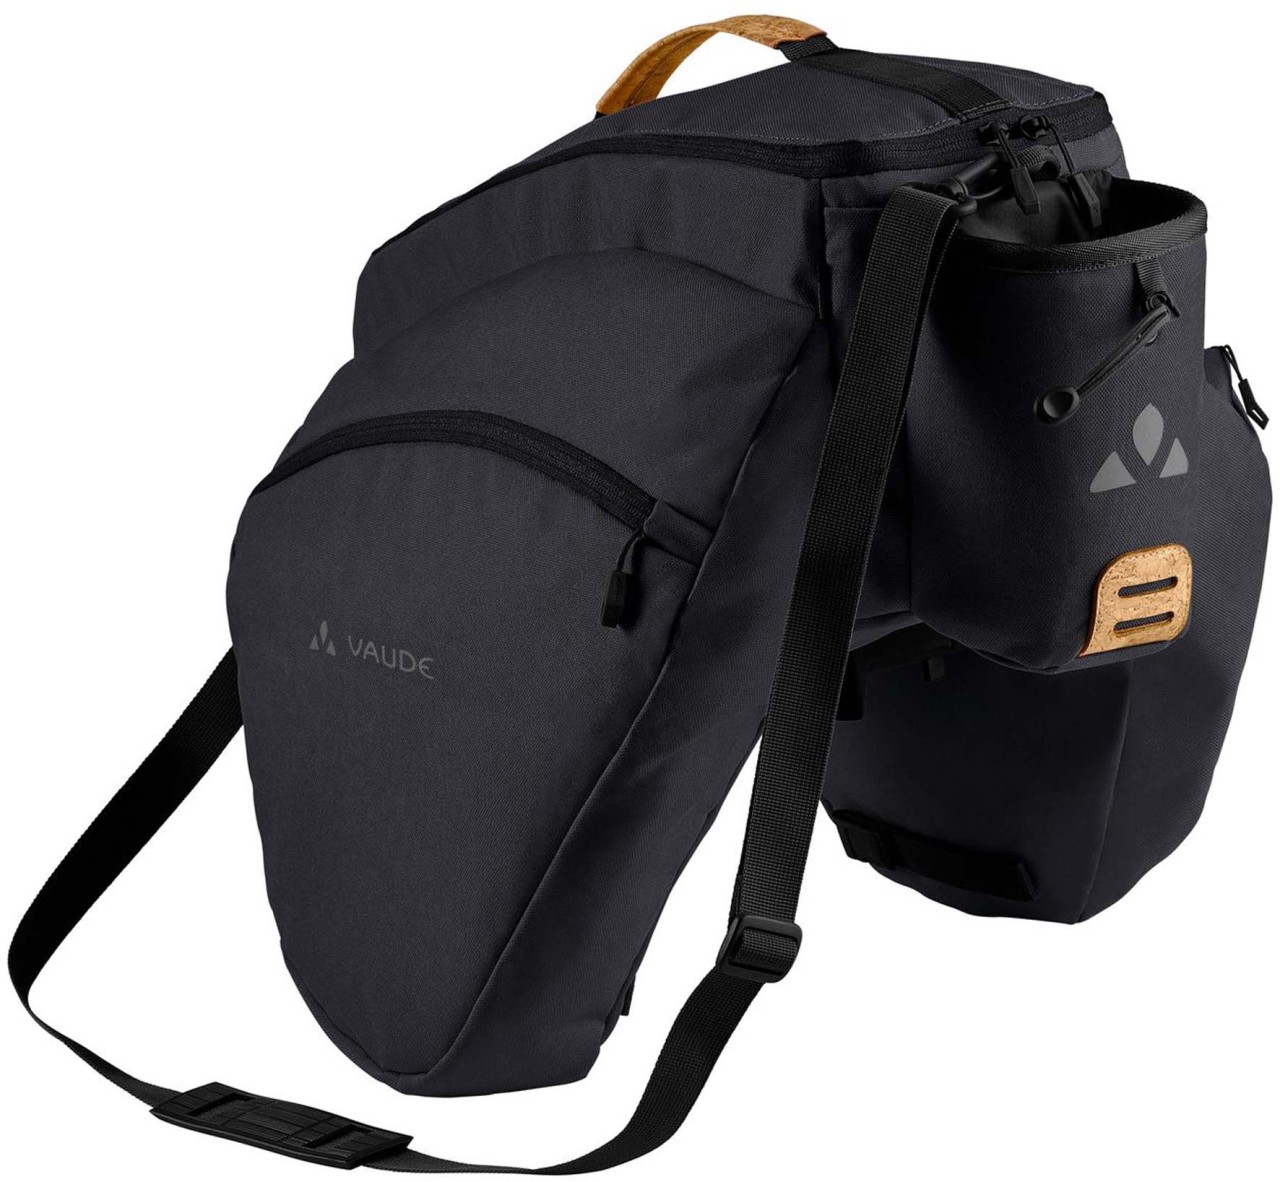 Vaude eSilkroad Plus carrier bag, black